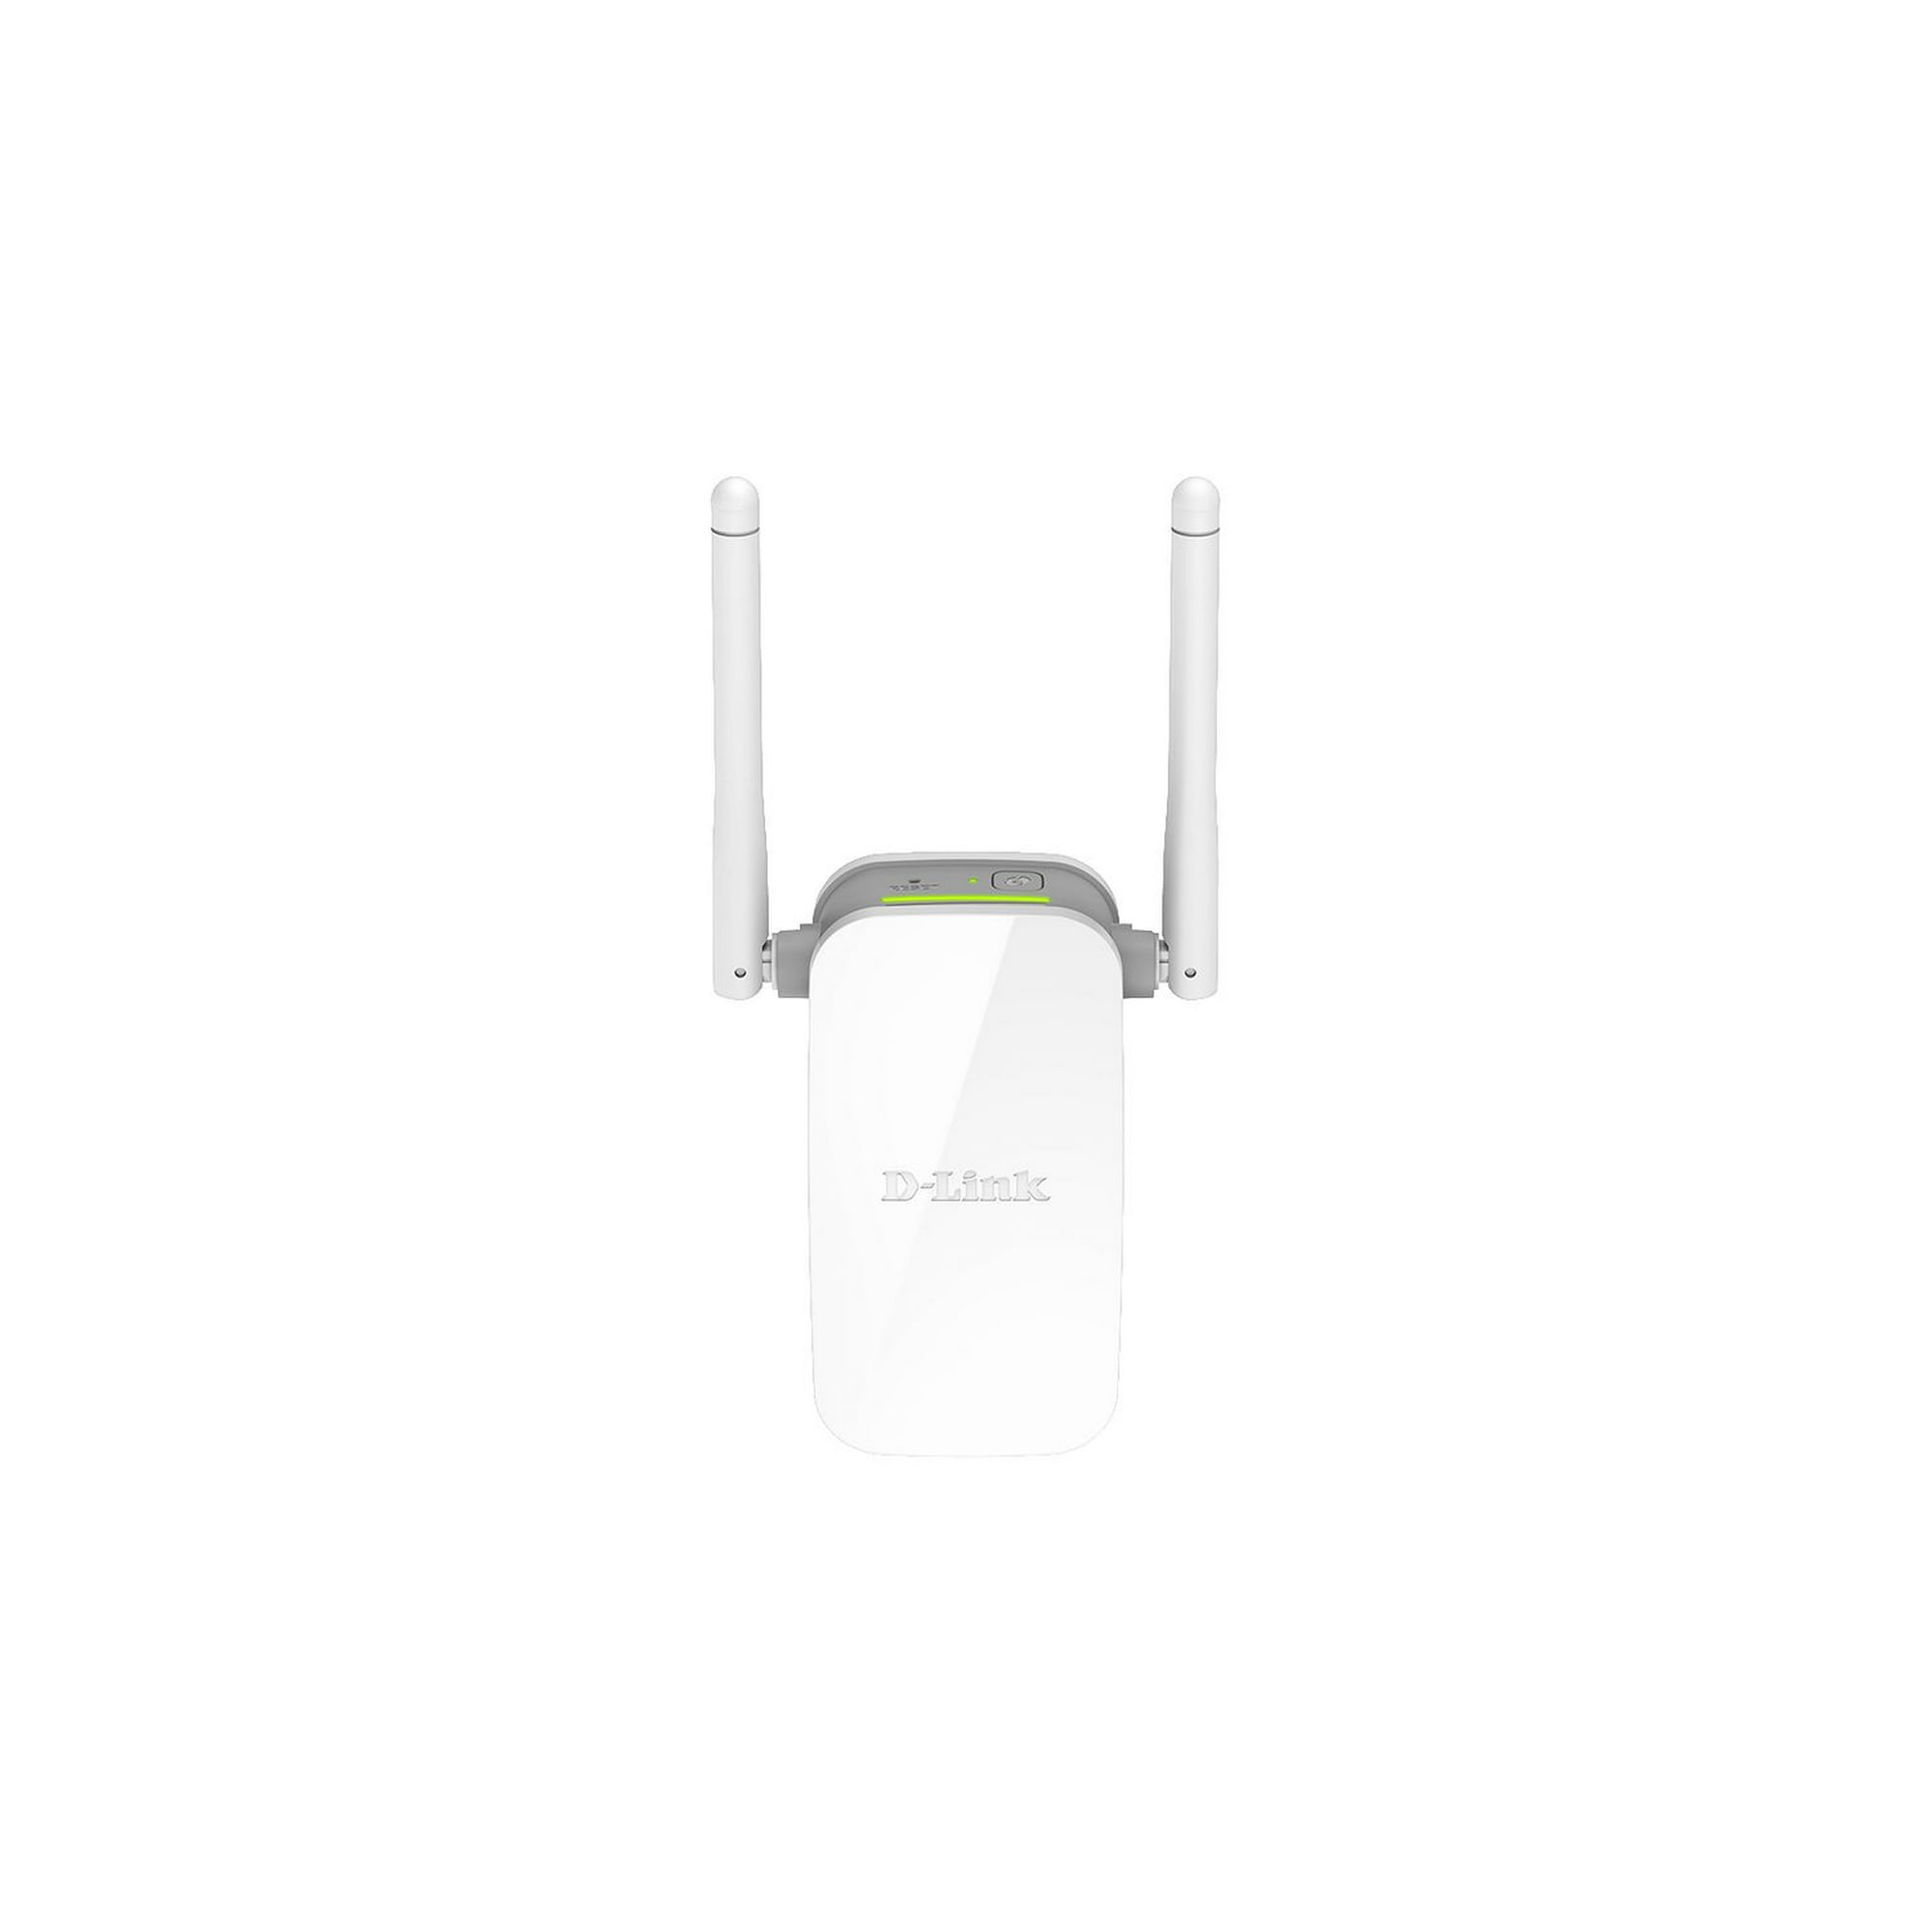 D-Link Dlink N300 Wireless Range Extender, More Than Just a Wi-Fi Extender  